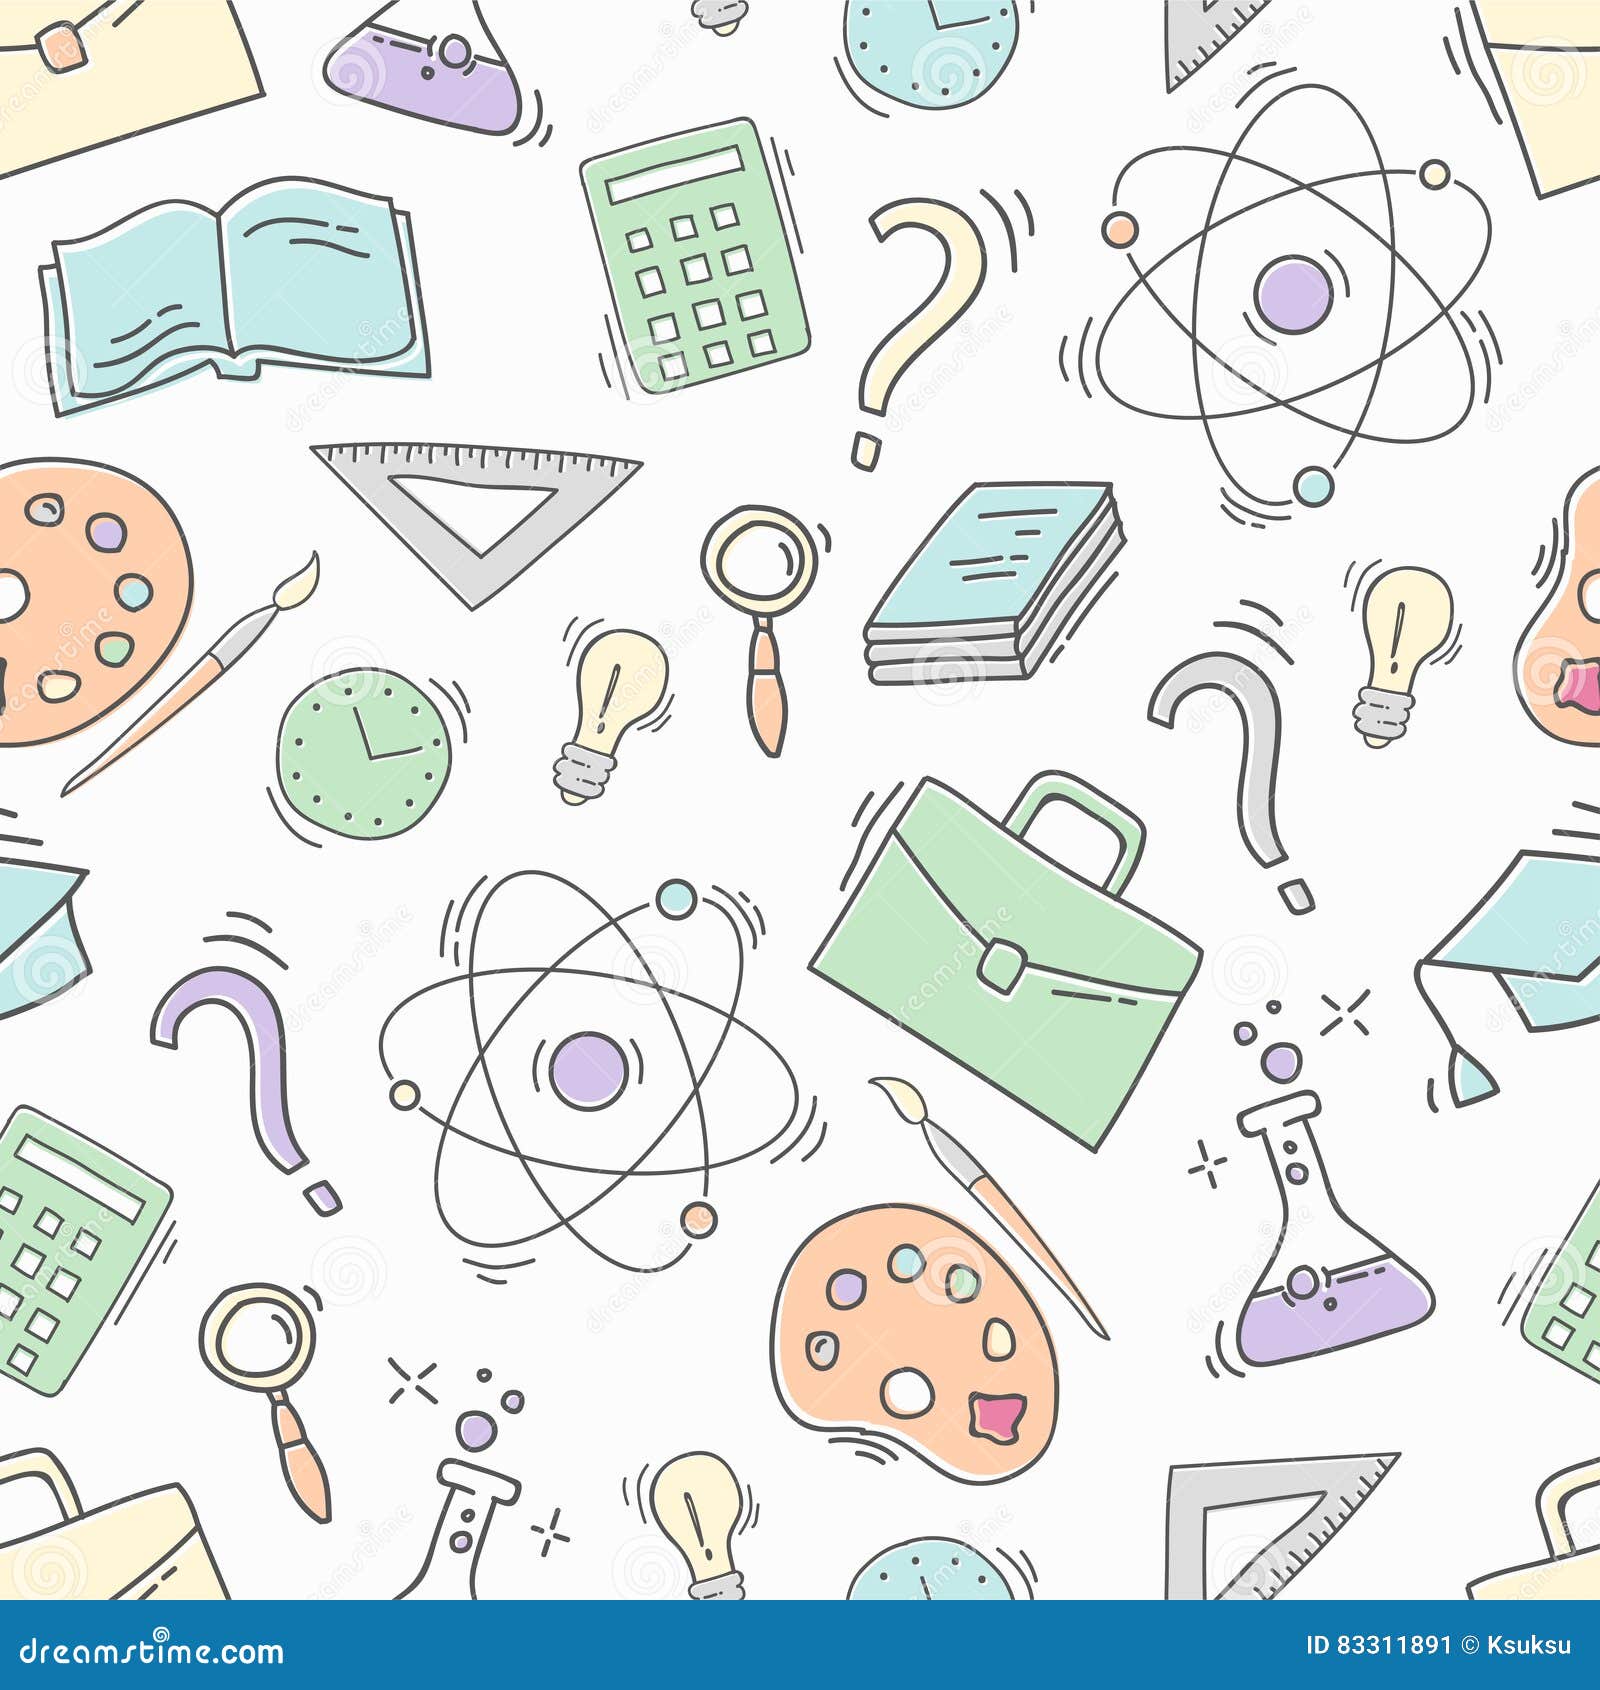 Desktop Productivity Wallpaper Get Studying Anki background too   rmedicalschoolanki